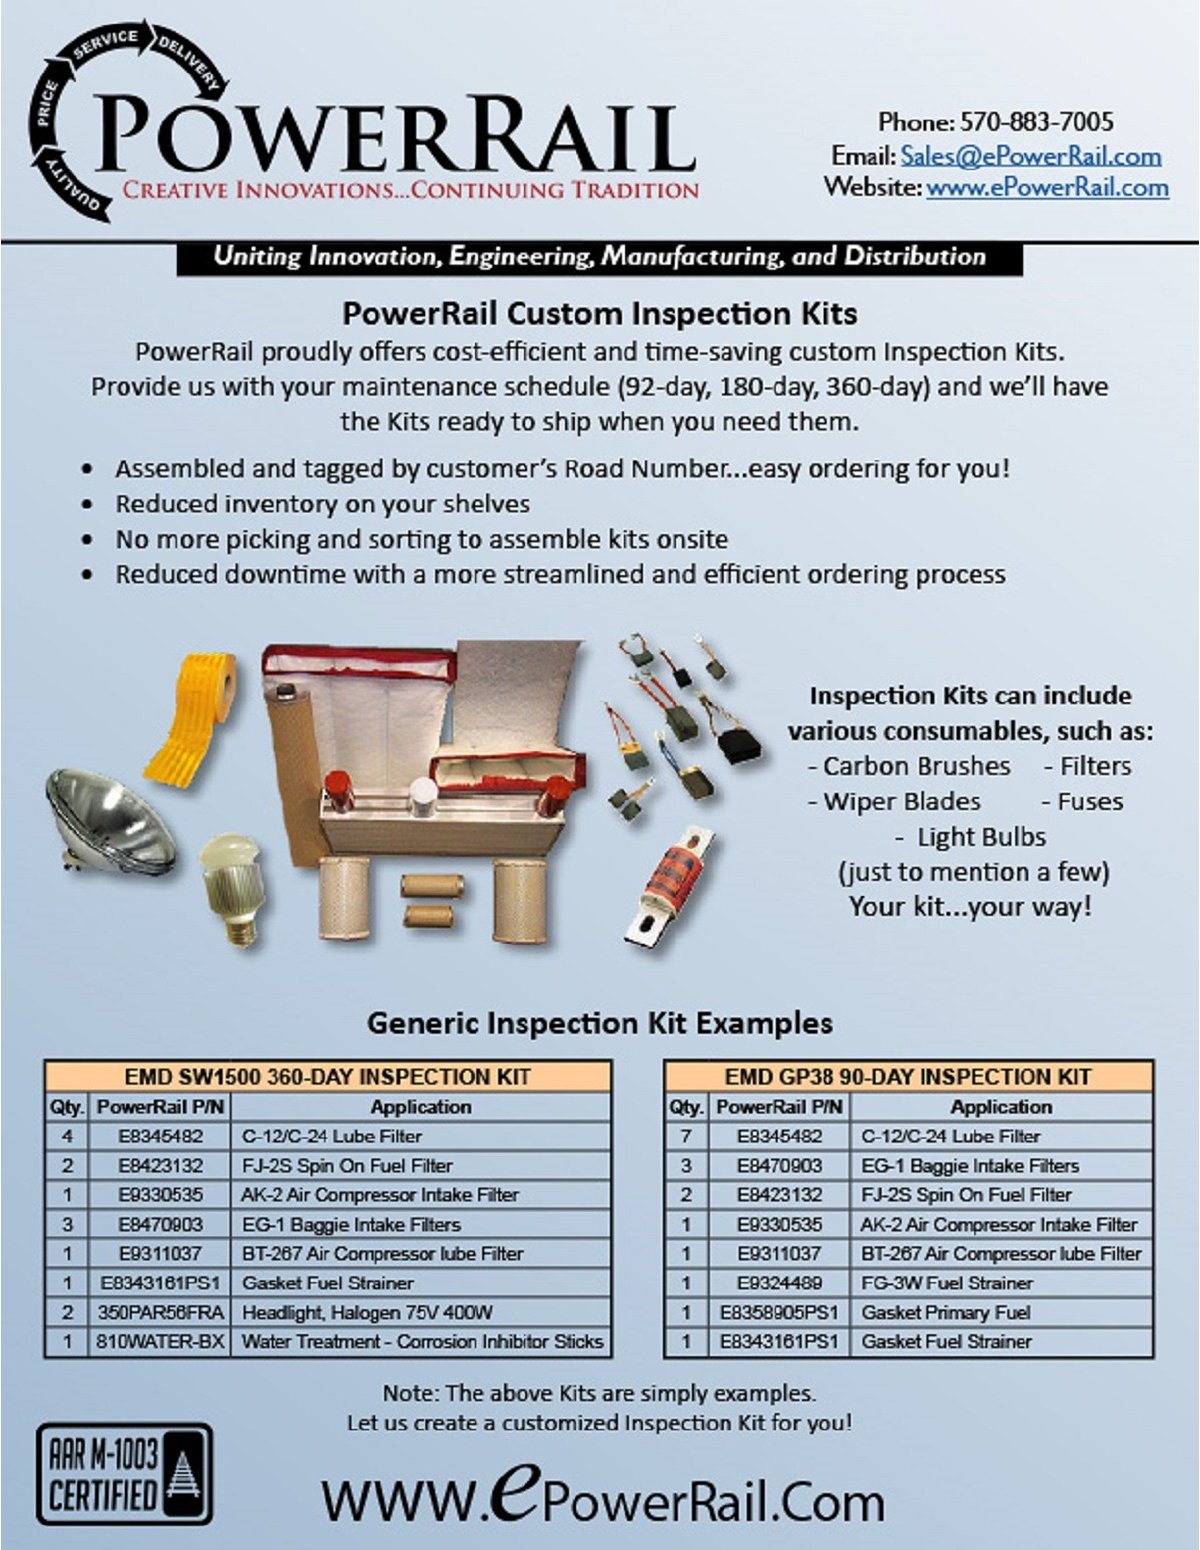 PowerRail Inspection Kits